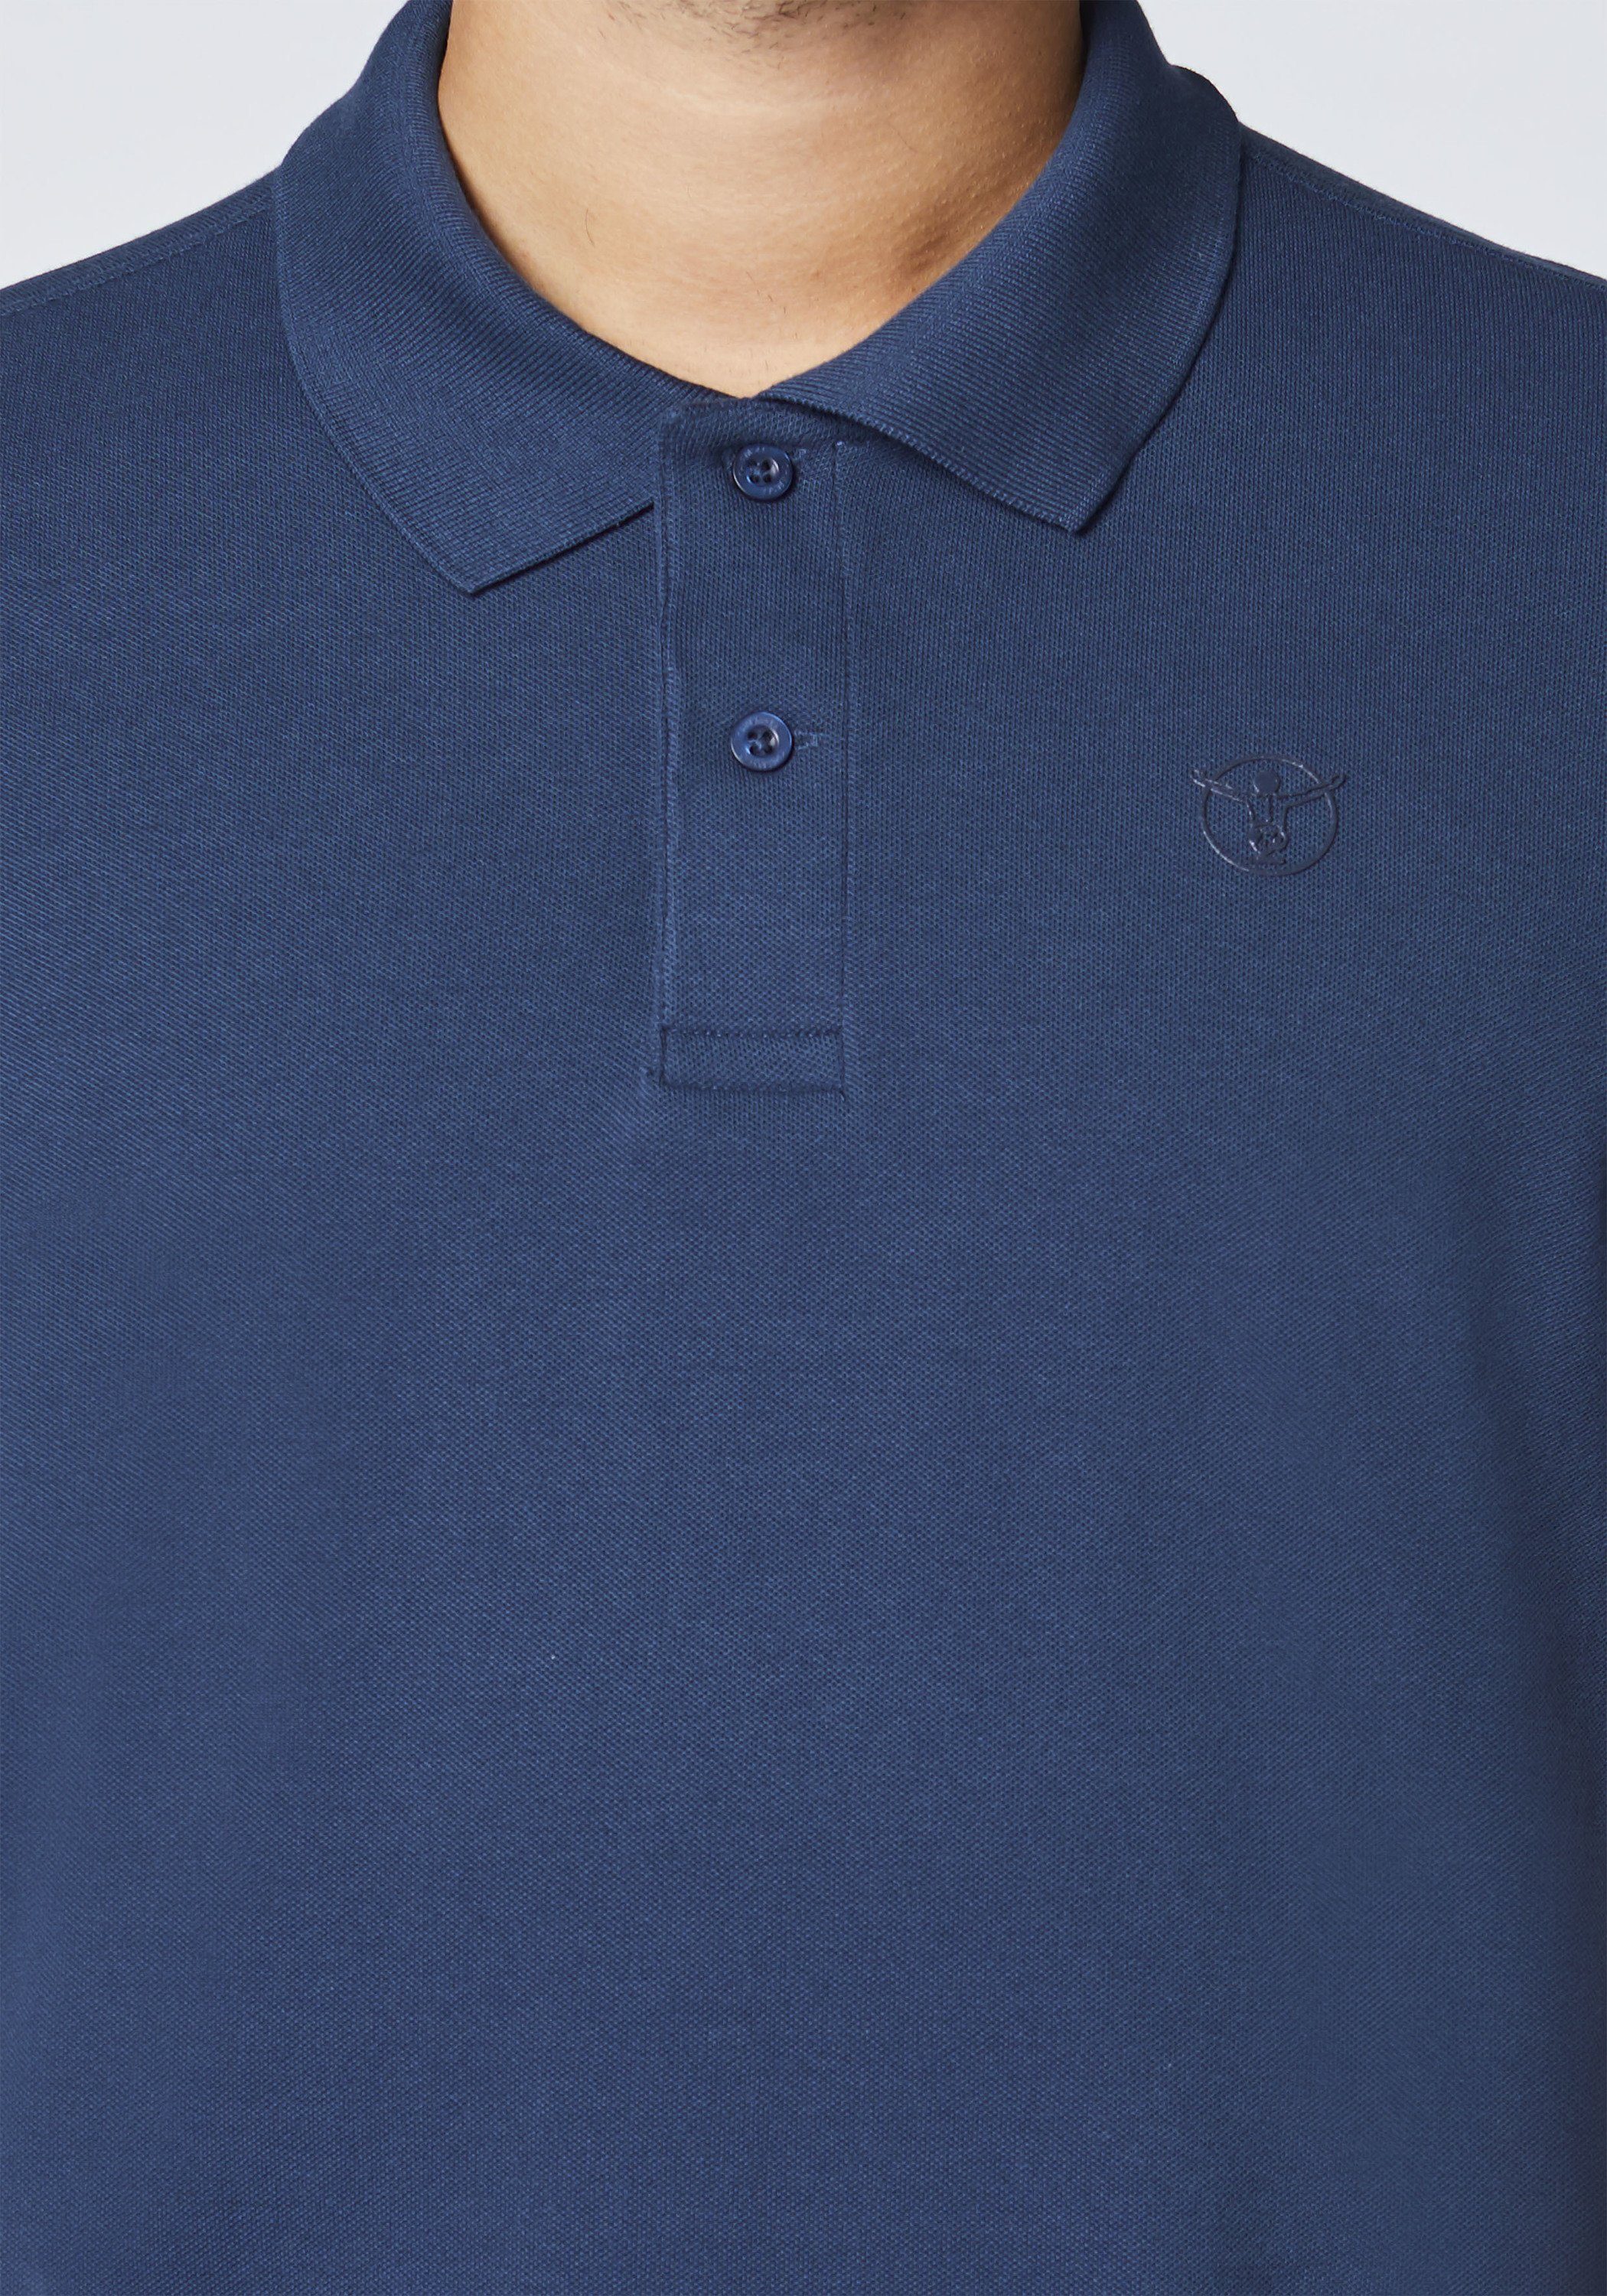 Chiemsee Poloshirt dunkel Poloshirt 1 blau mit Jumper-Motiv dezentem